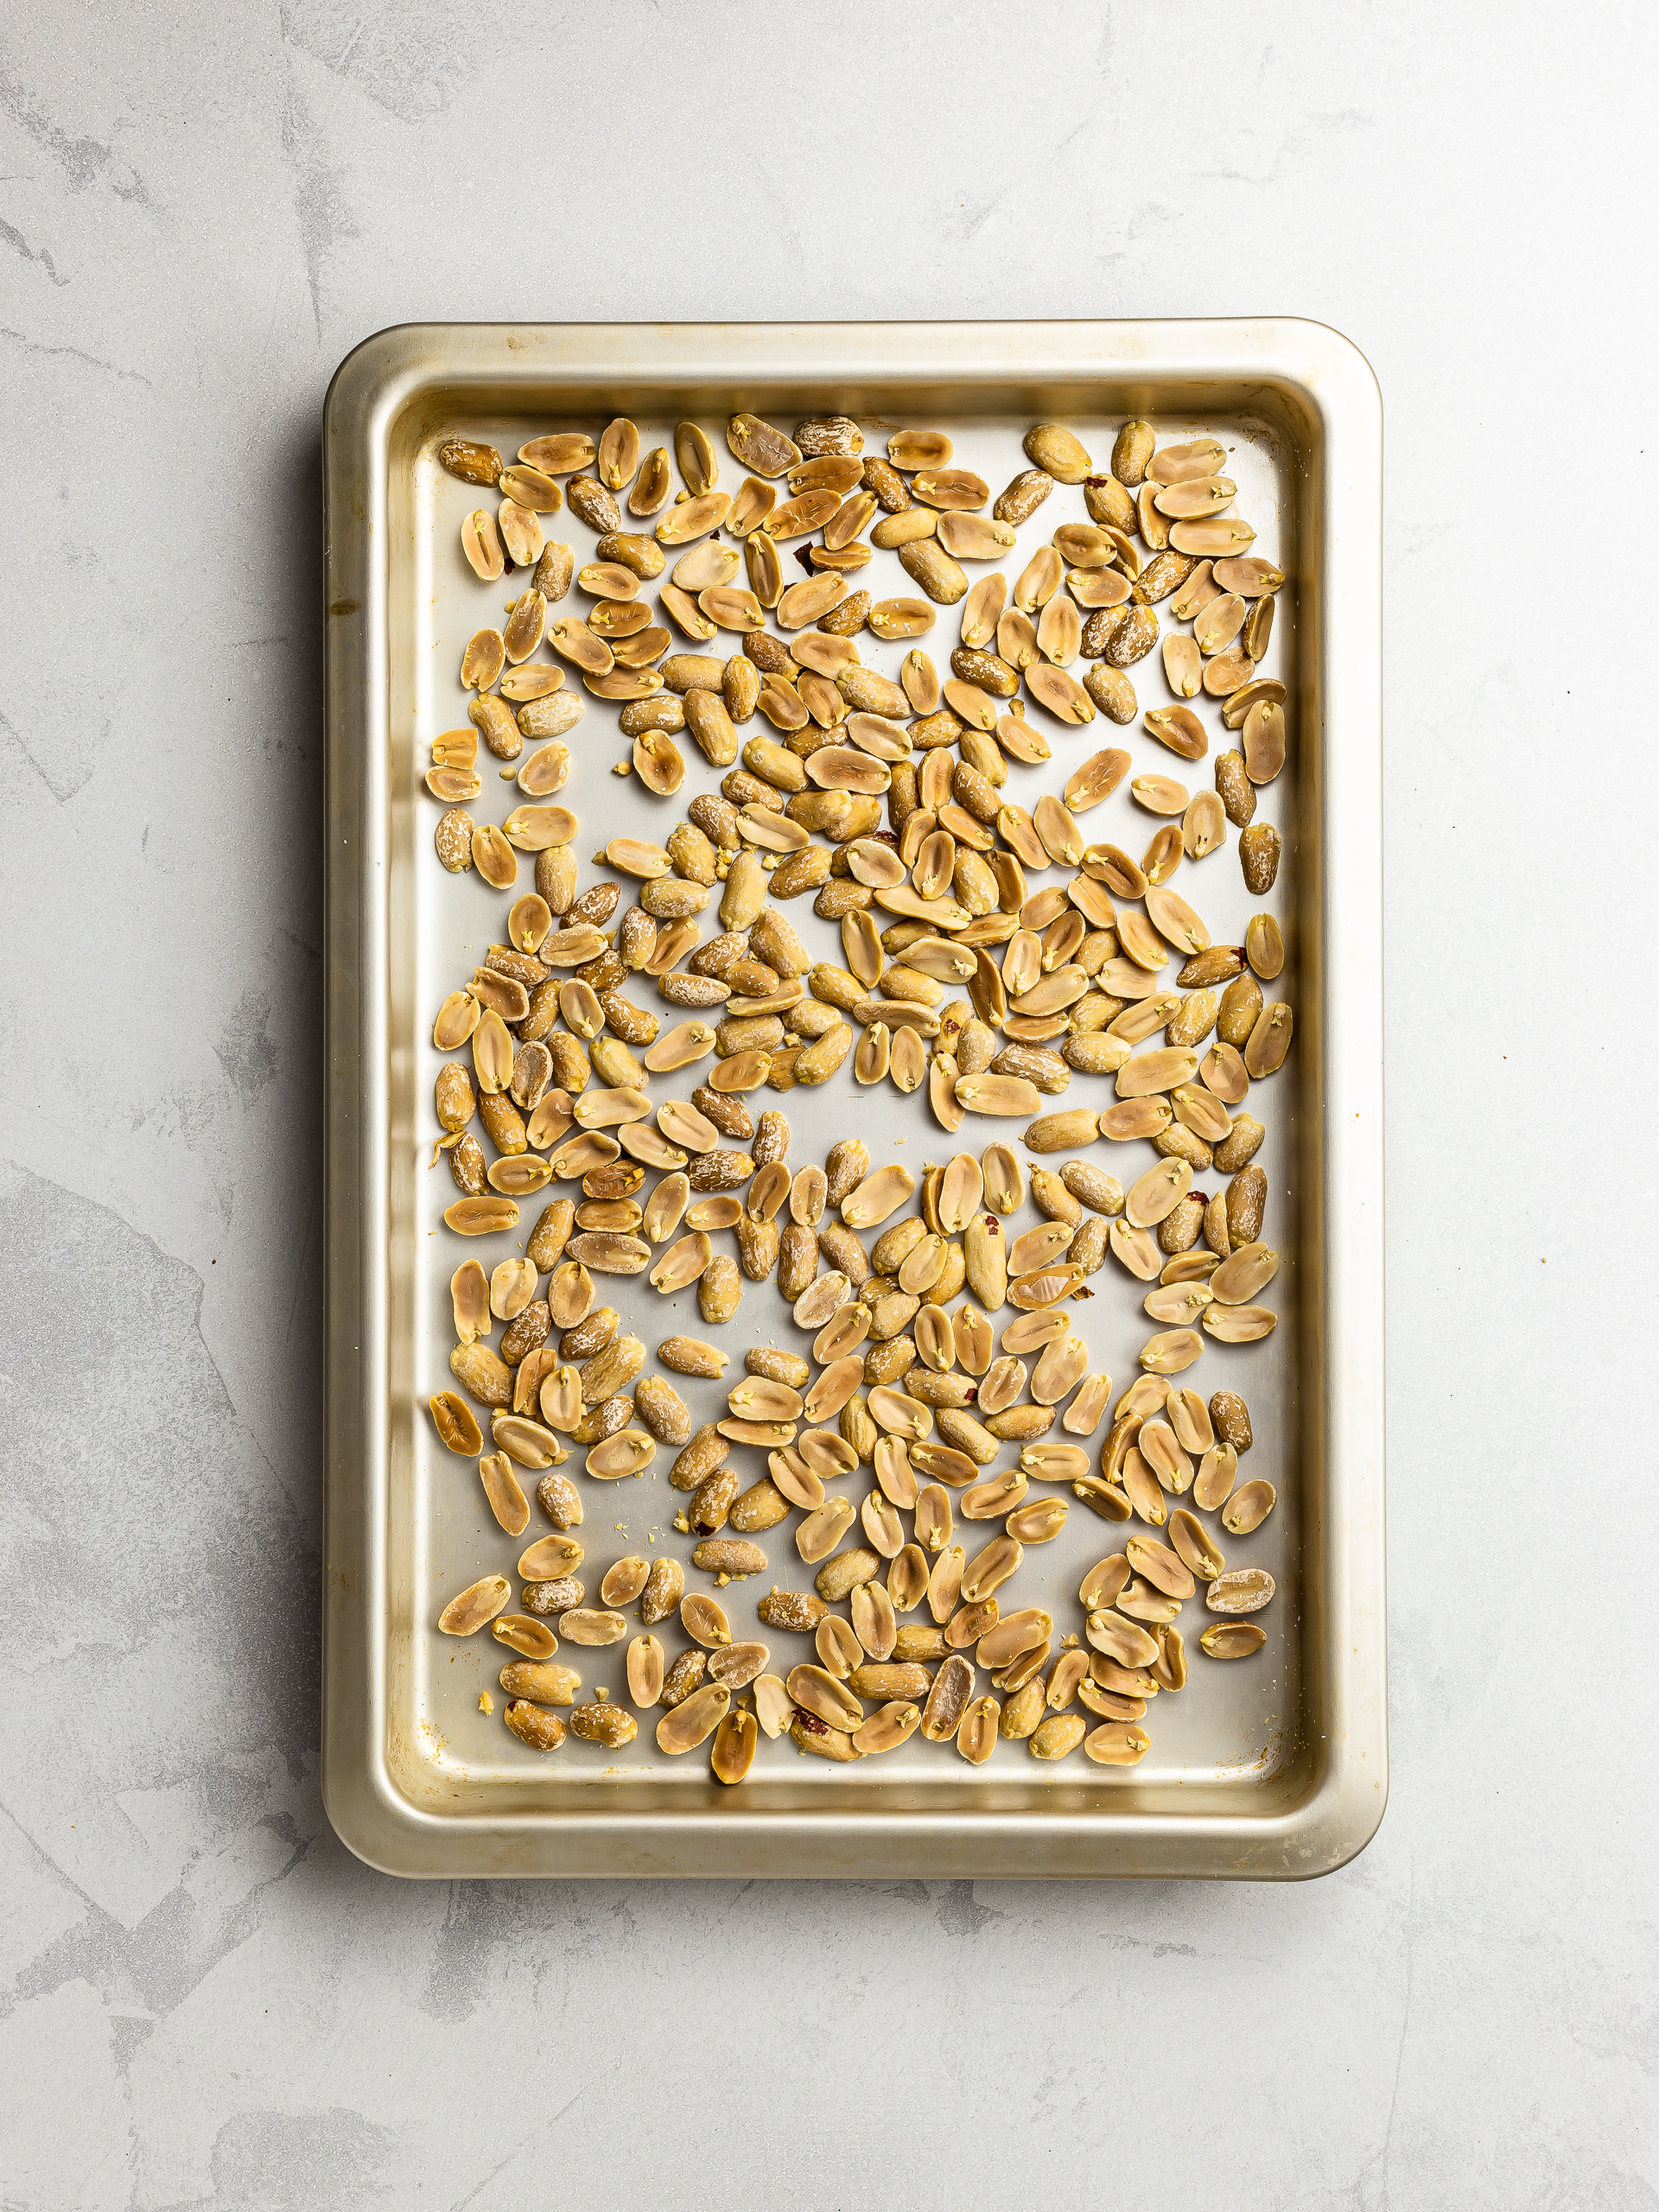 roasted peanuts on a tray